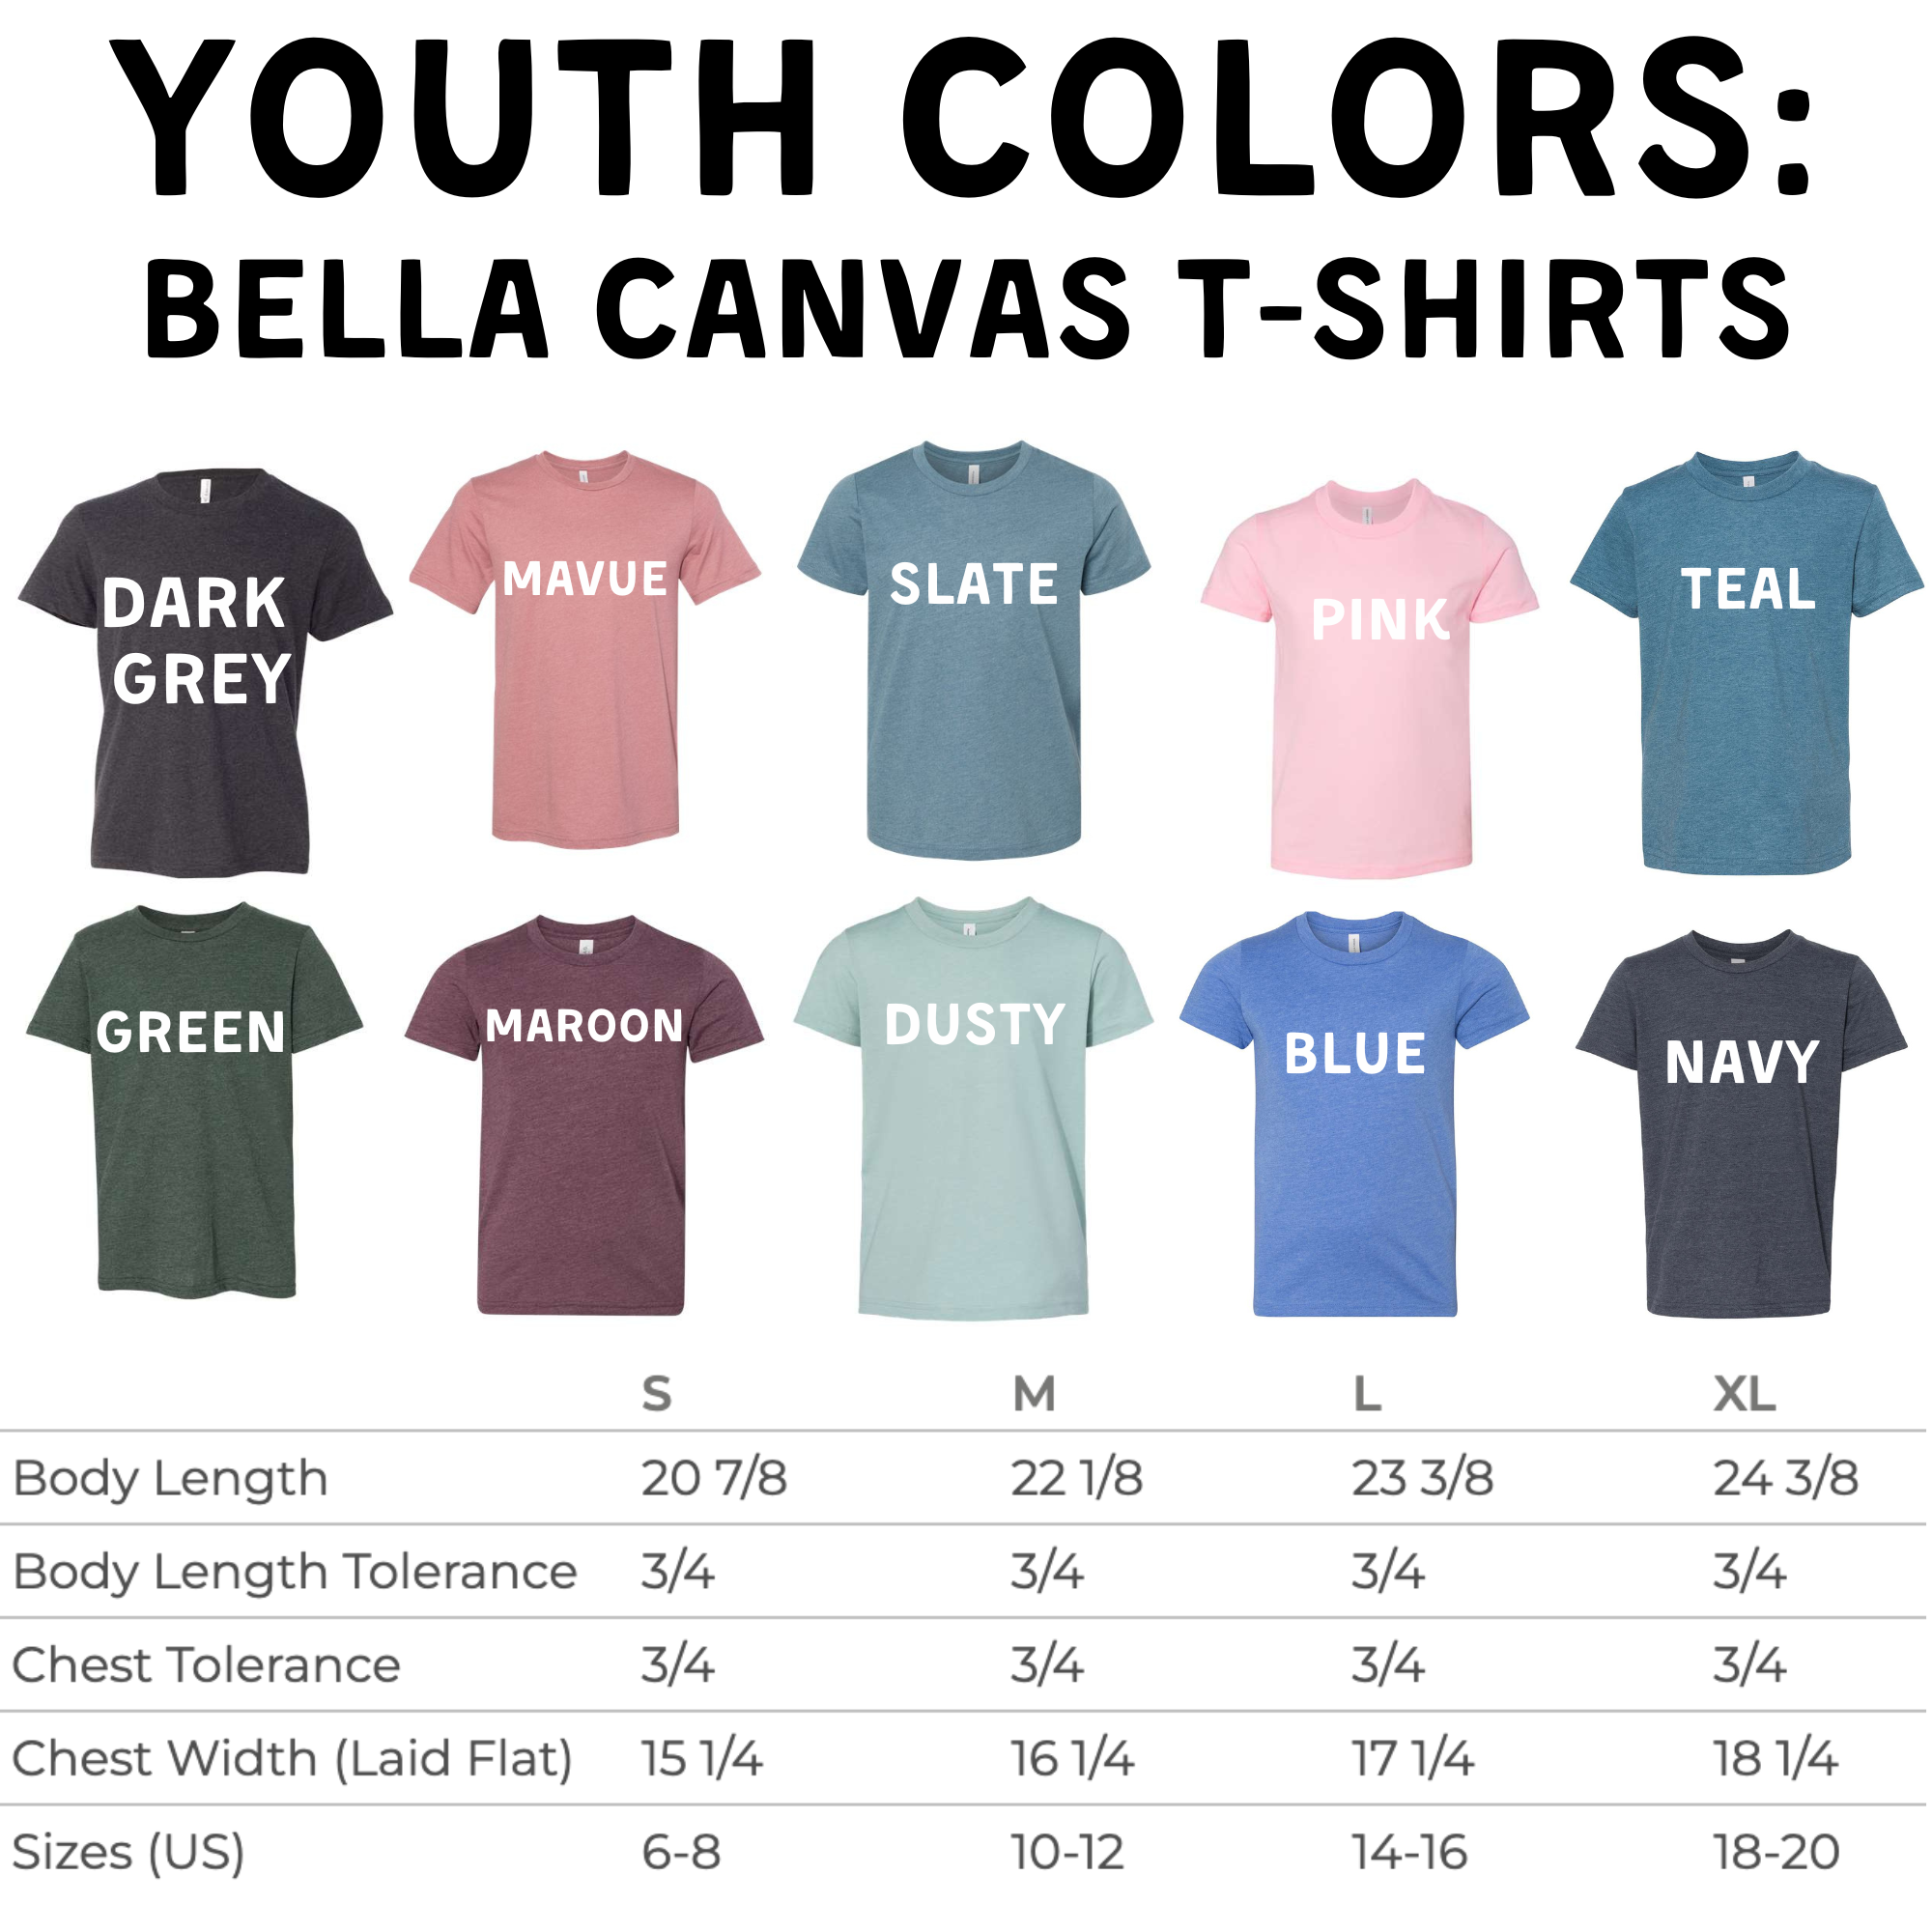 Don't Be Trashy Youth T-Shirt-Baby & Toddler-208 Tees Wholesale, Idaho